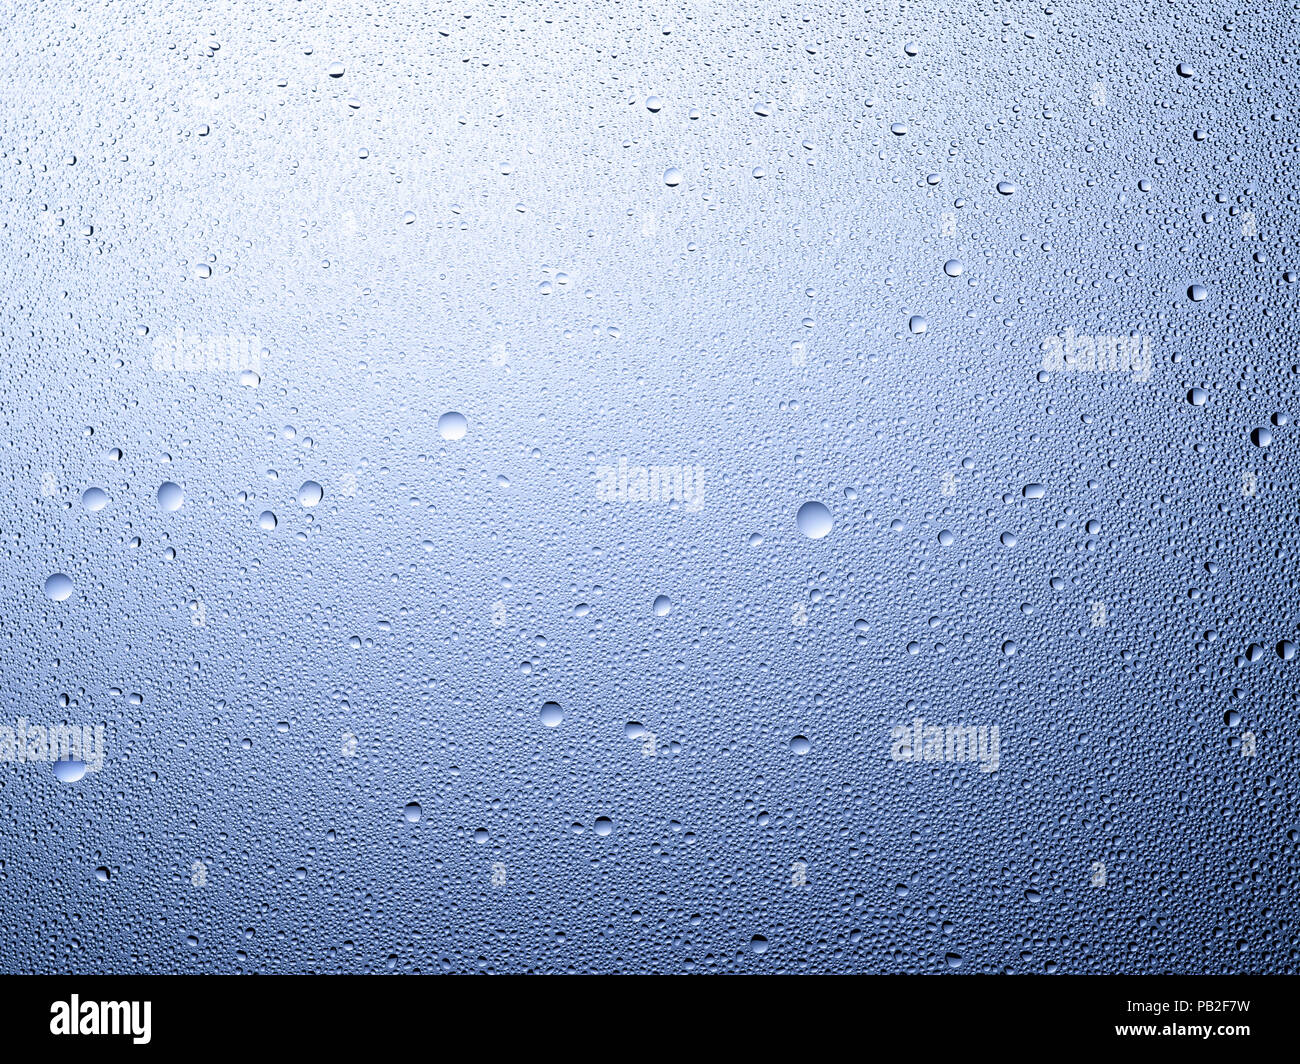 A graphic landscape framed shot of some dew, droplets or condensation. Stock Photo